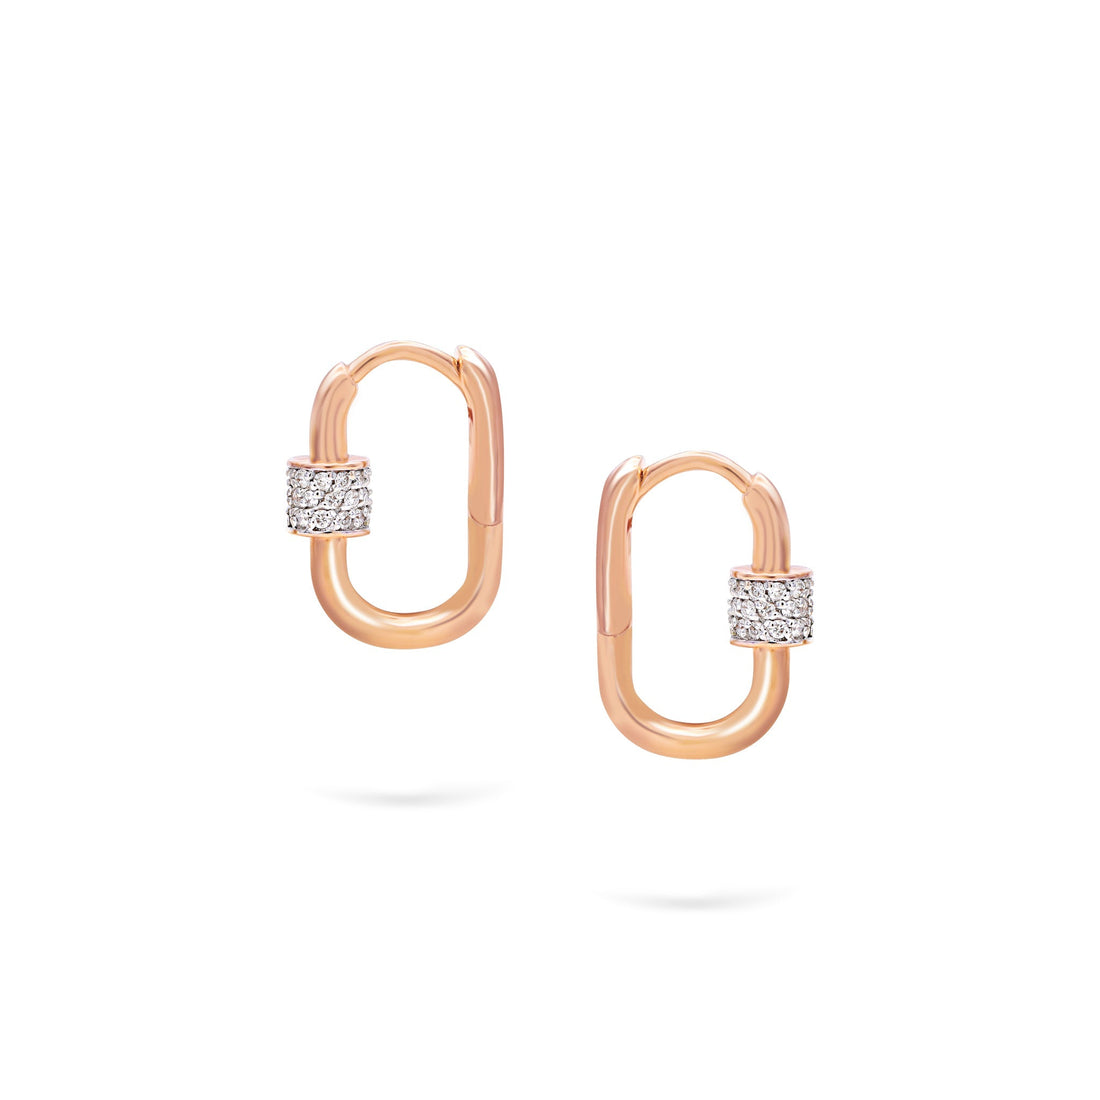 Jewelry Musica Hoops | Small Diamond Earrings | 0.43 Cts. | 14K Gold - Rose / Pair / earring Zengoda Shop online